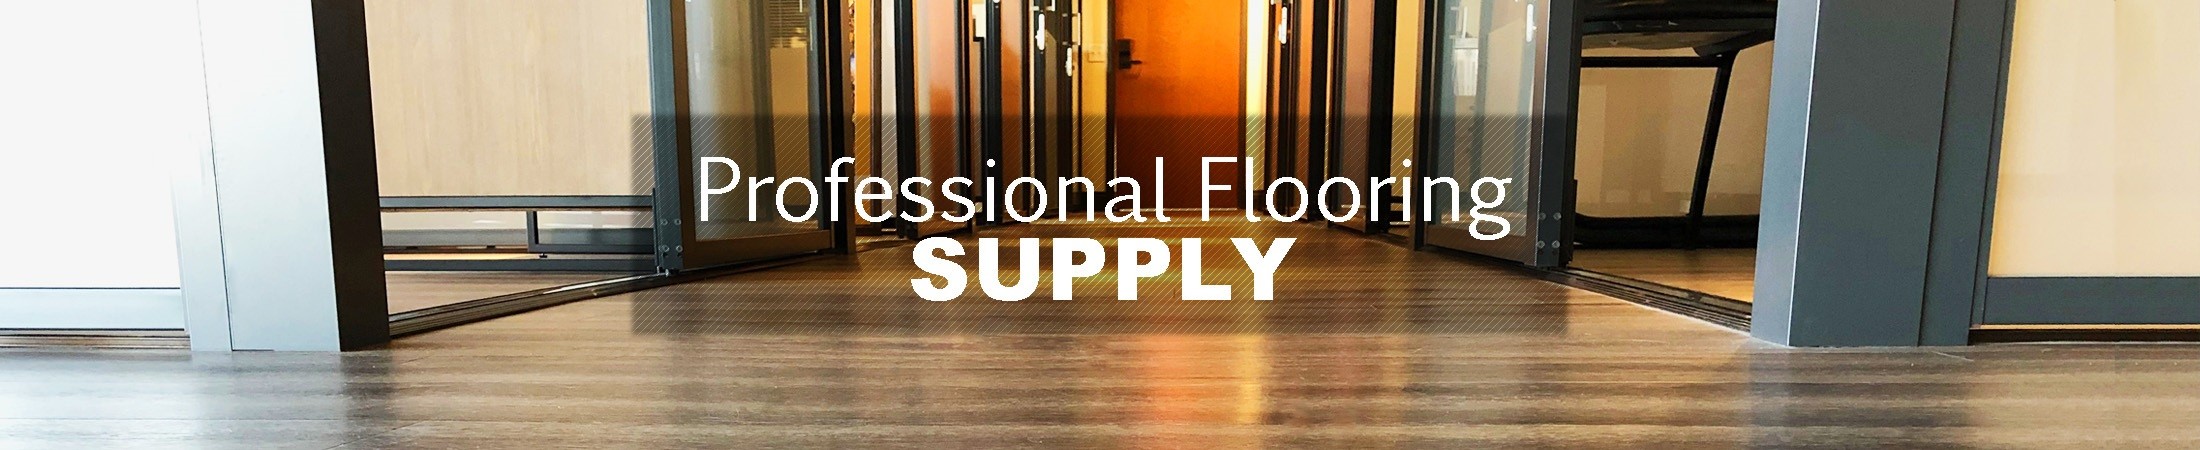 Professional Flooring Supply Linkedin